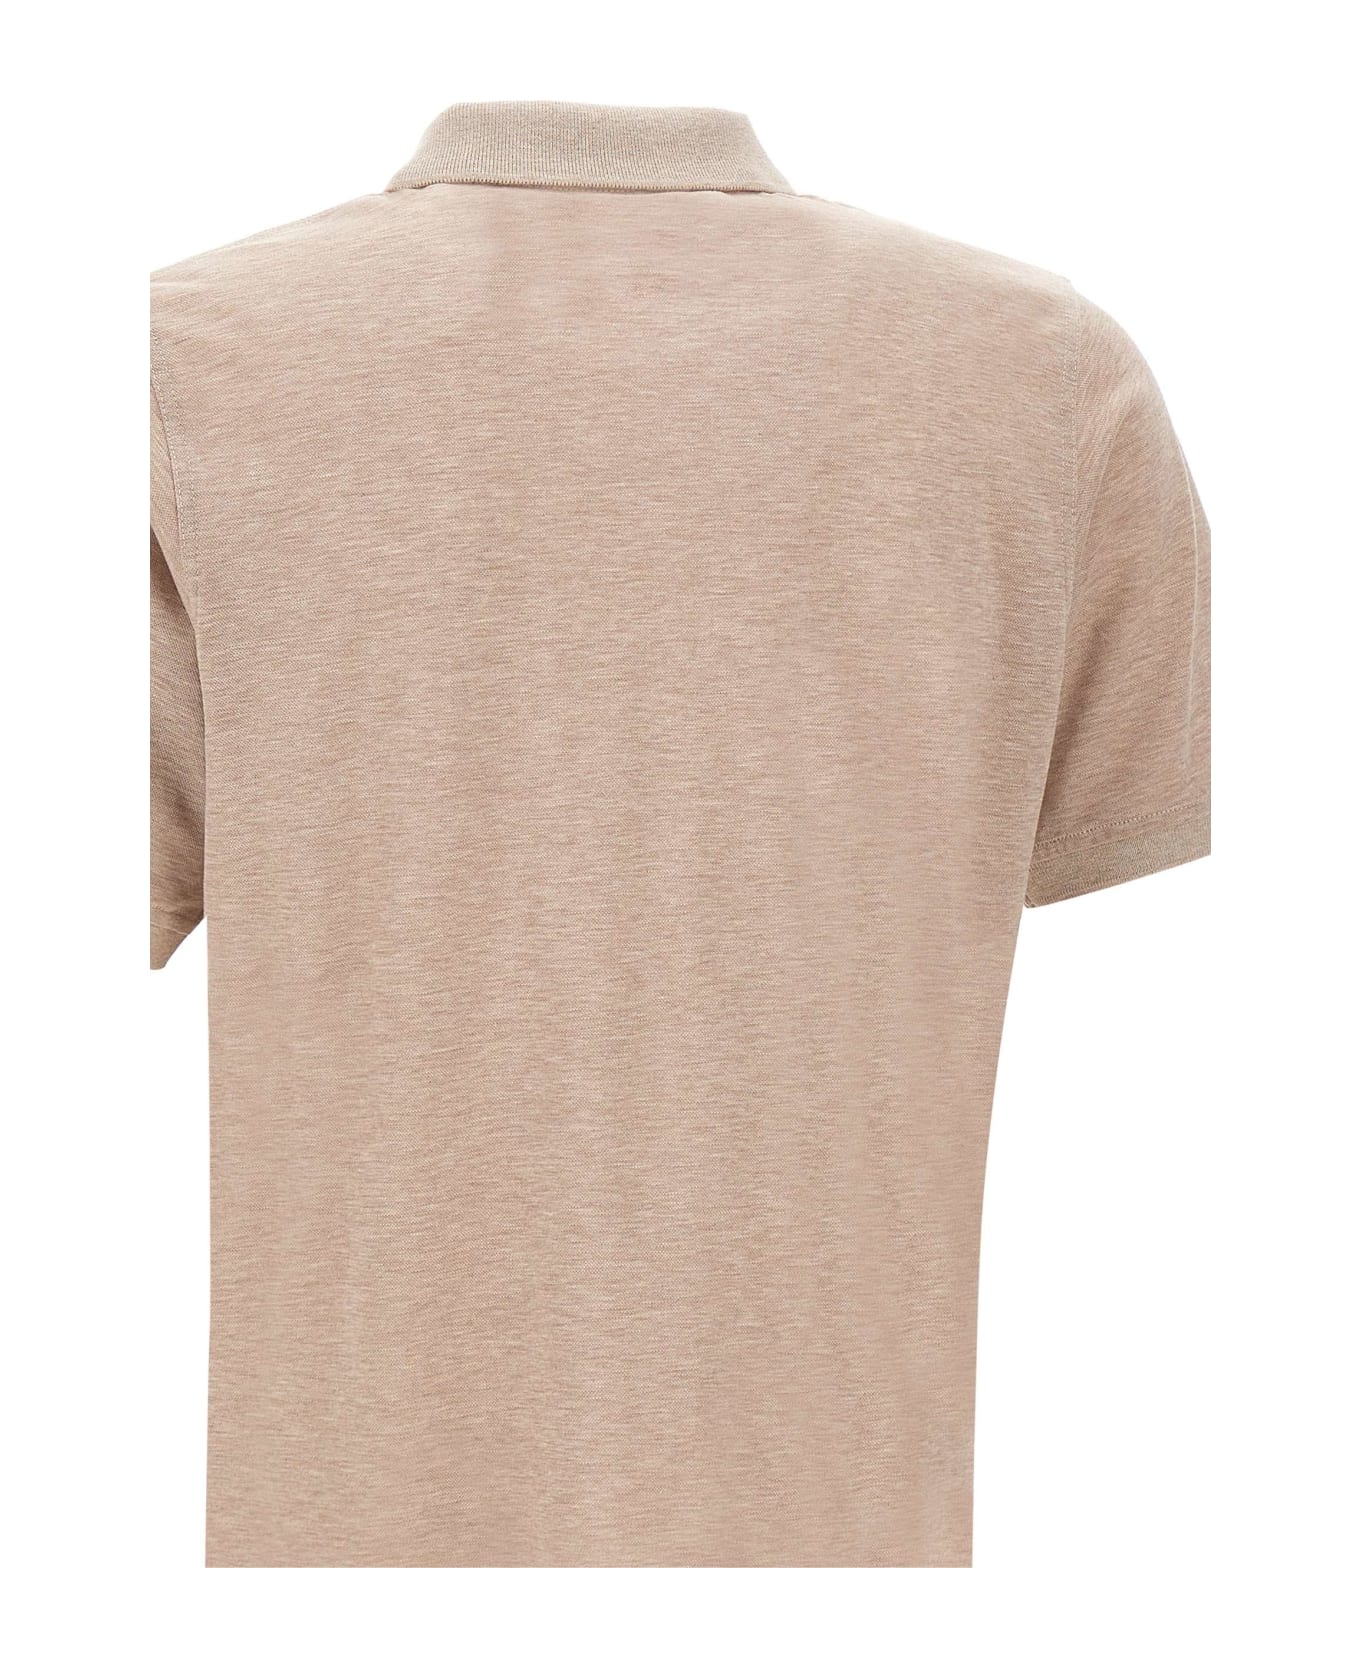 Kiton Cotton Polo Shirt - BEIGE ポロシャツ